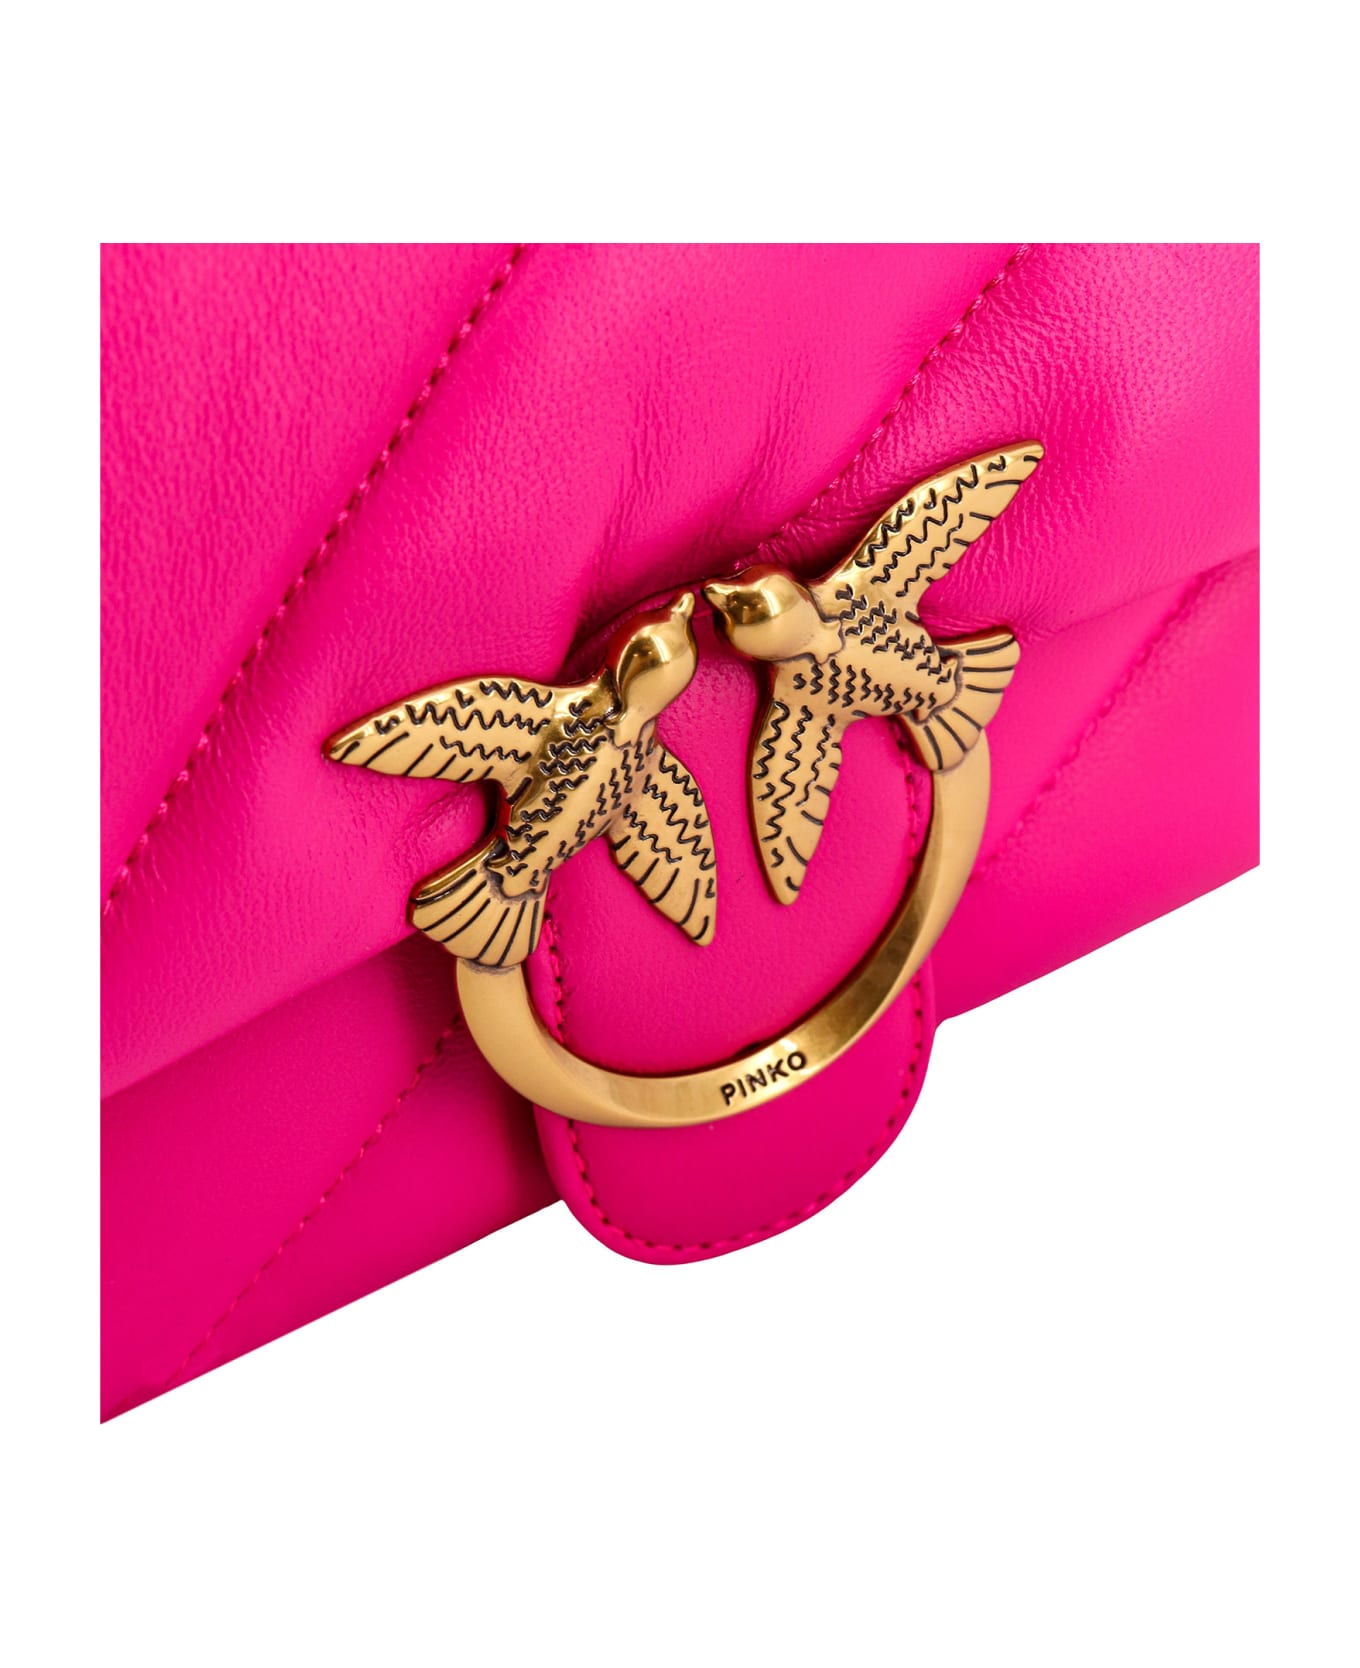 Pinko Love Puff Mini Bag - PINK PINKO  ANTIQUE GOLD ショルダーバッグ